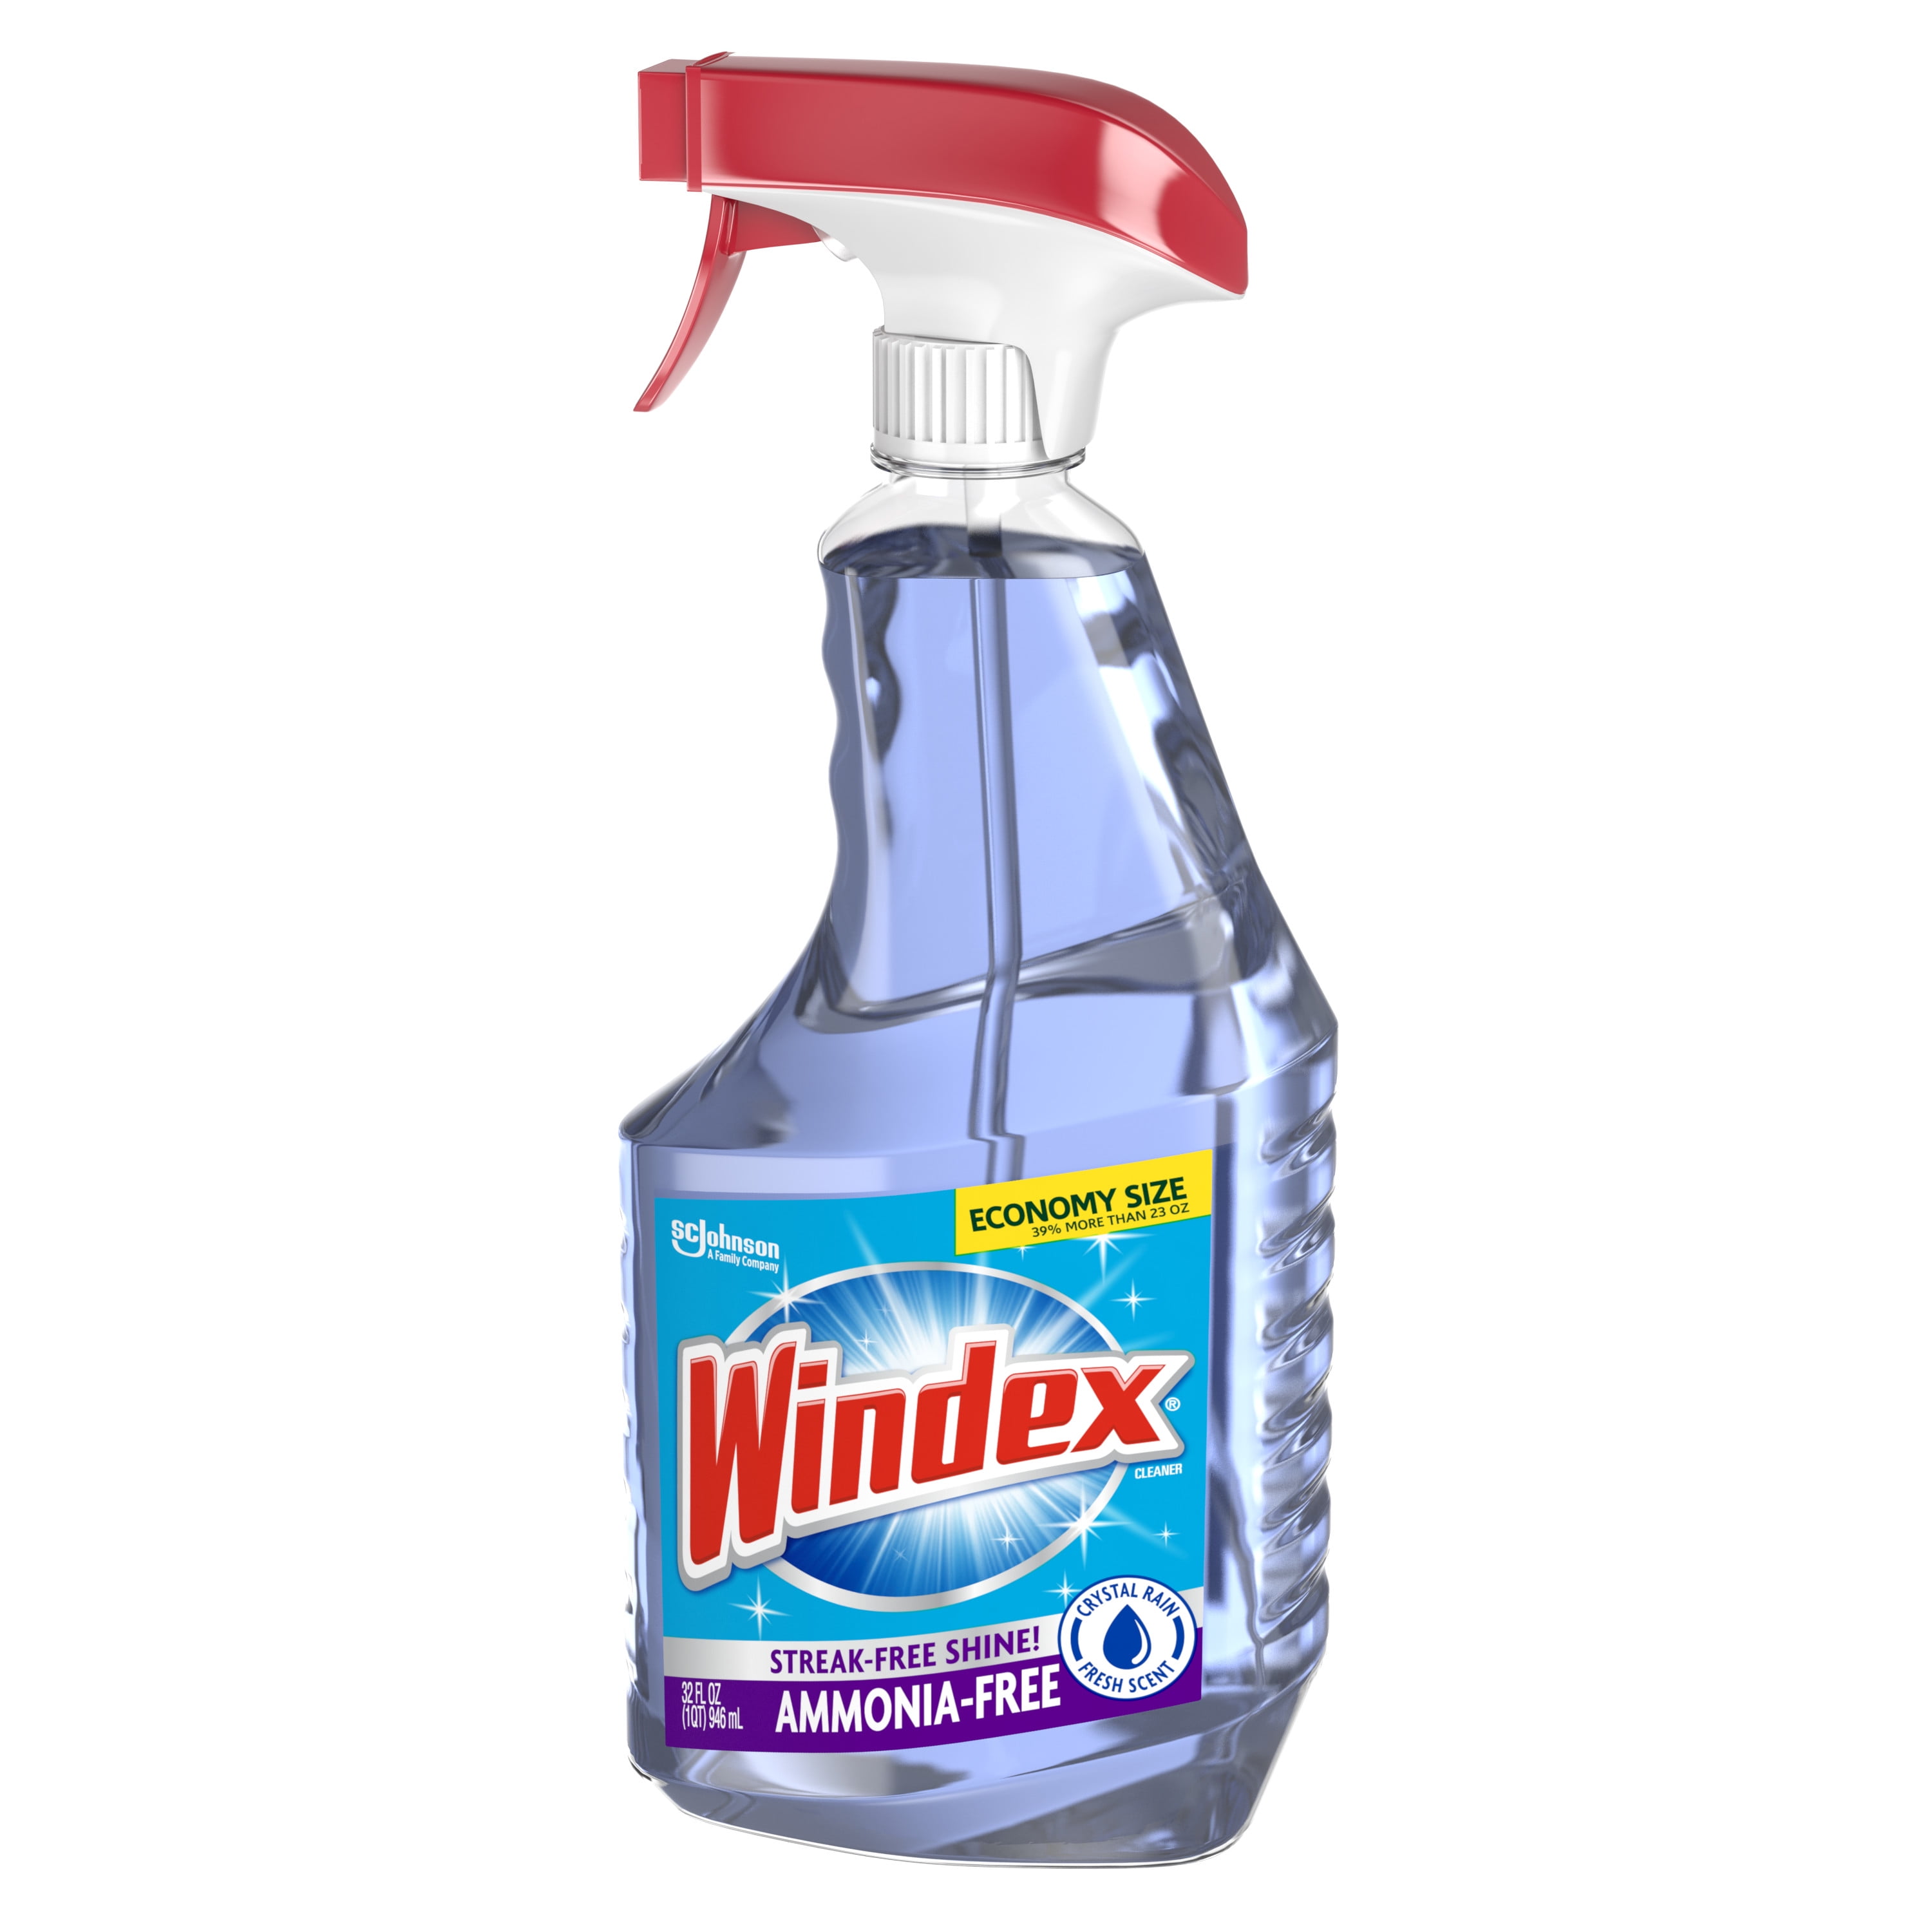 Windex Cleaner, Original, Economy Size - 32 fl oz